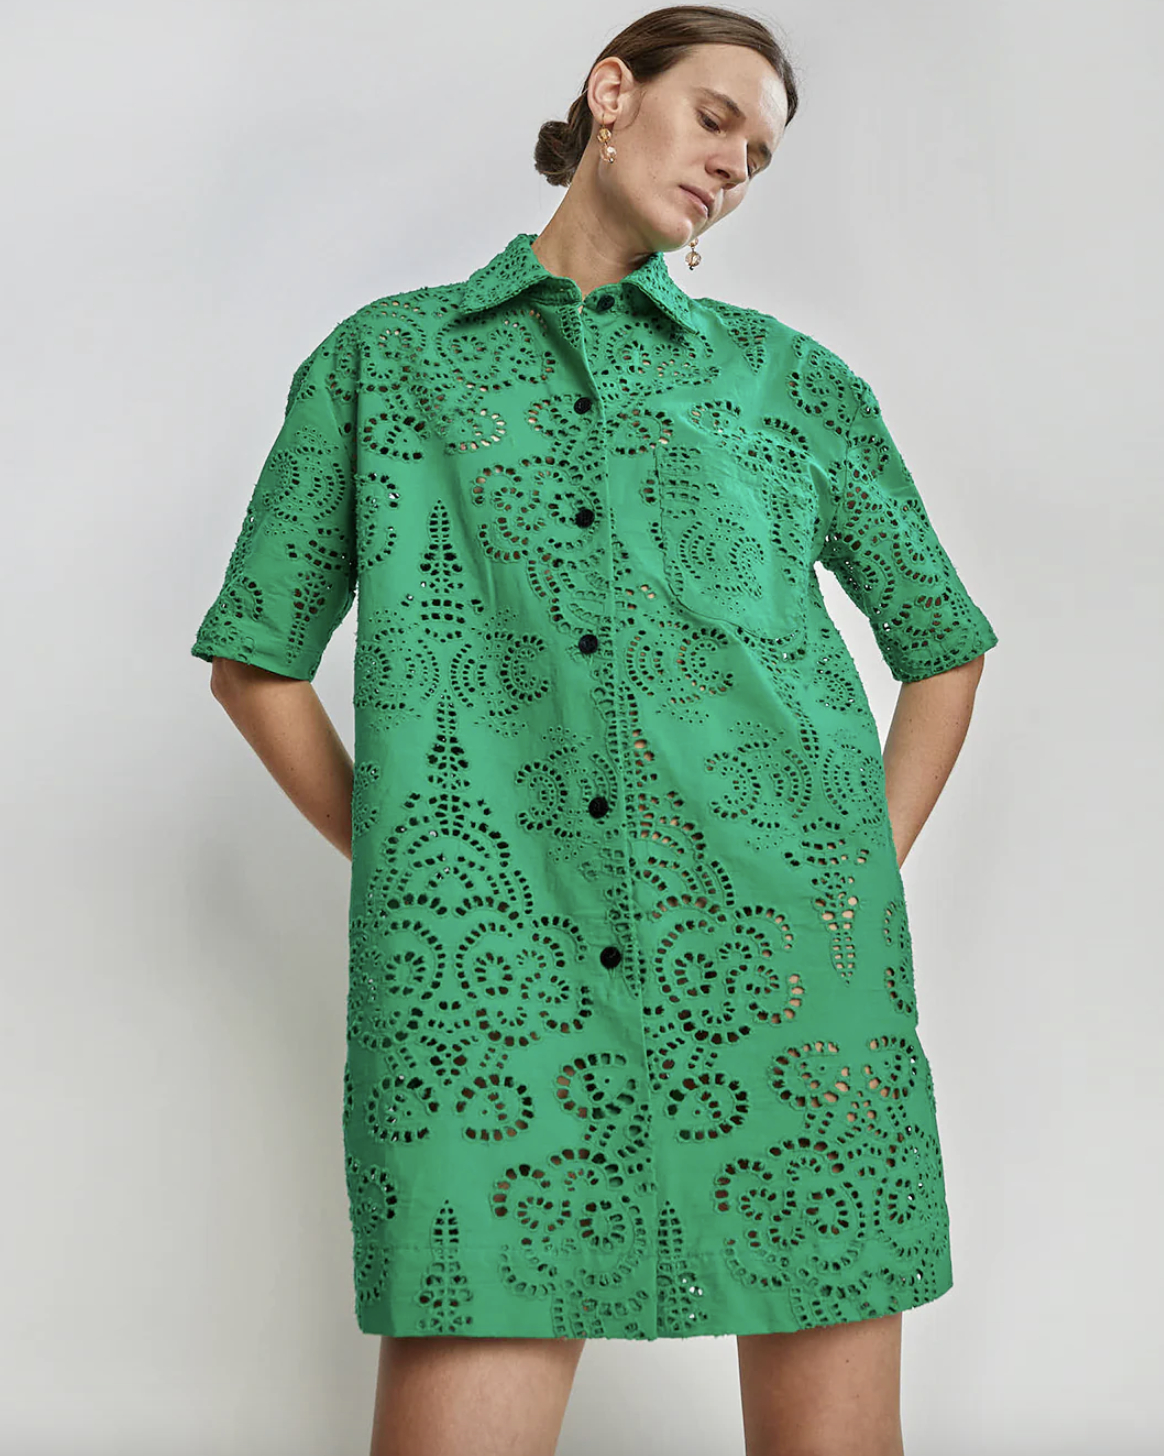 MACK DRESS - Green